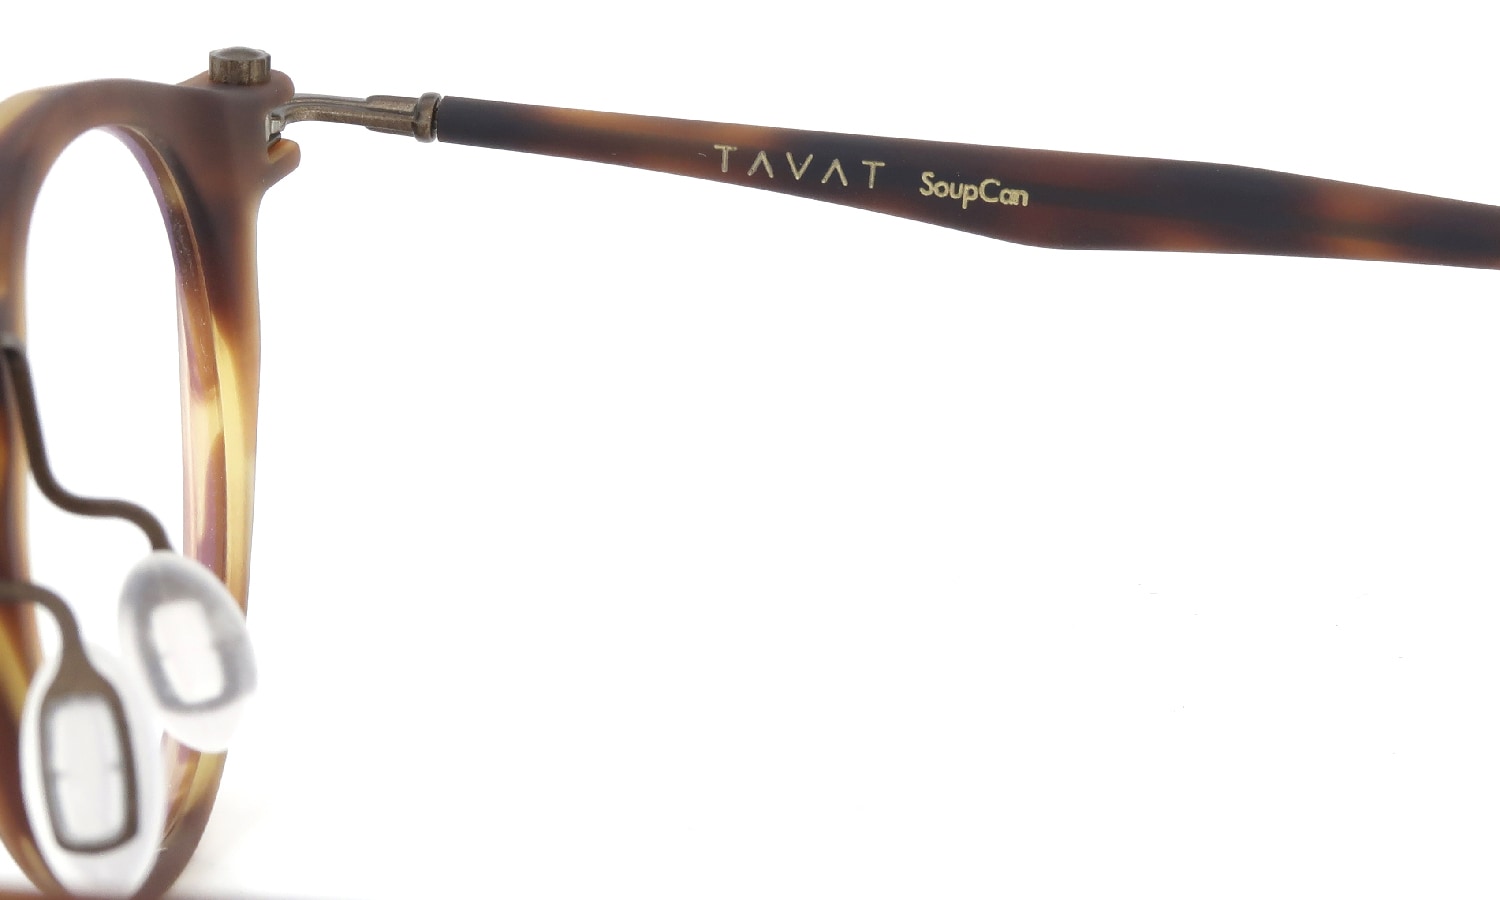 TAVAT Soup-Can Velos|A SC025 HAV